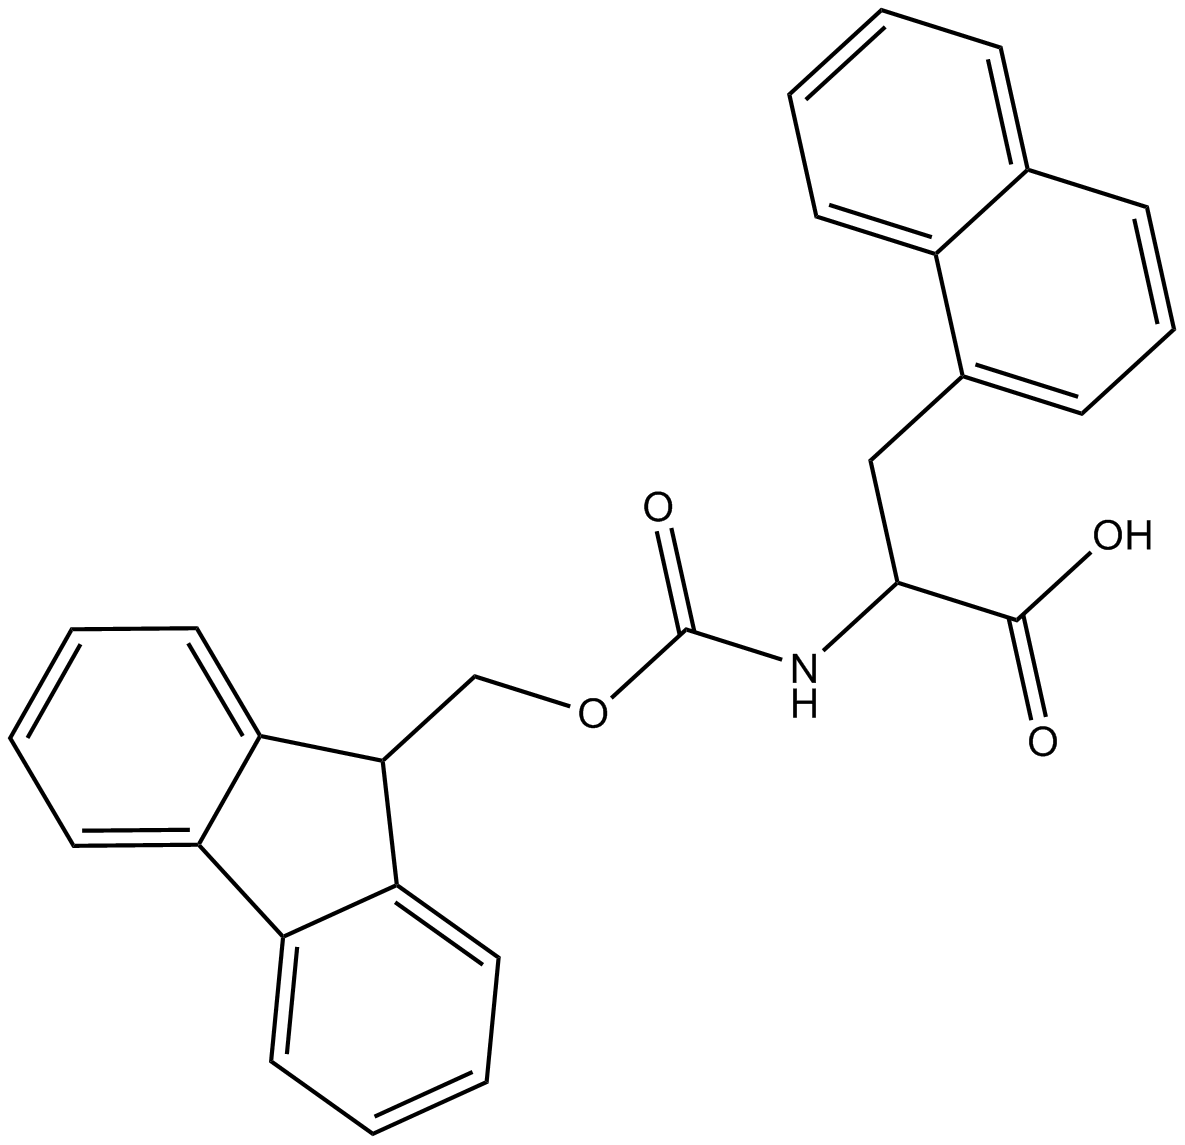 Fmoc-1-Nal-OH Chemische Struktur